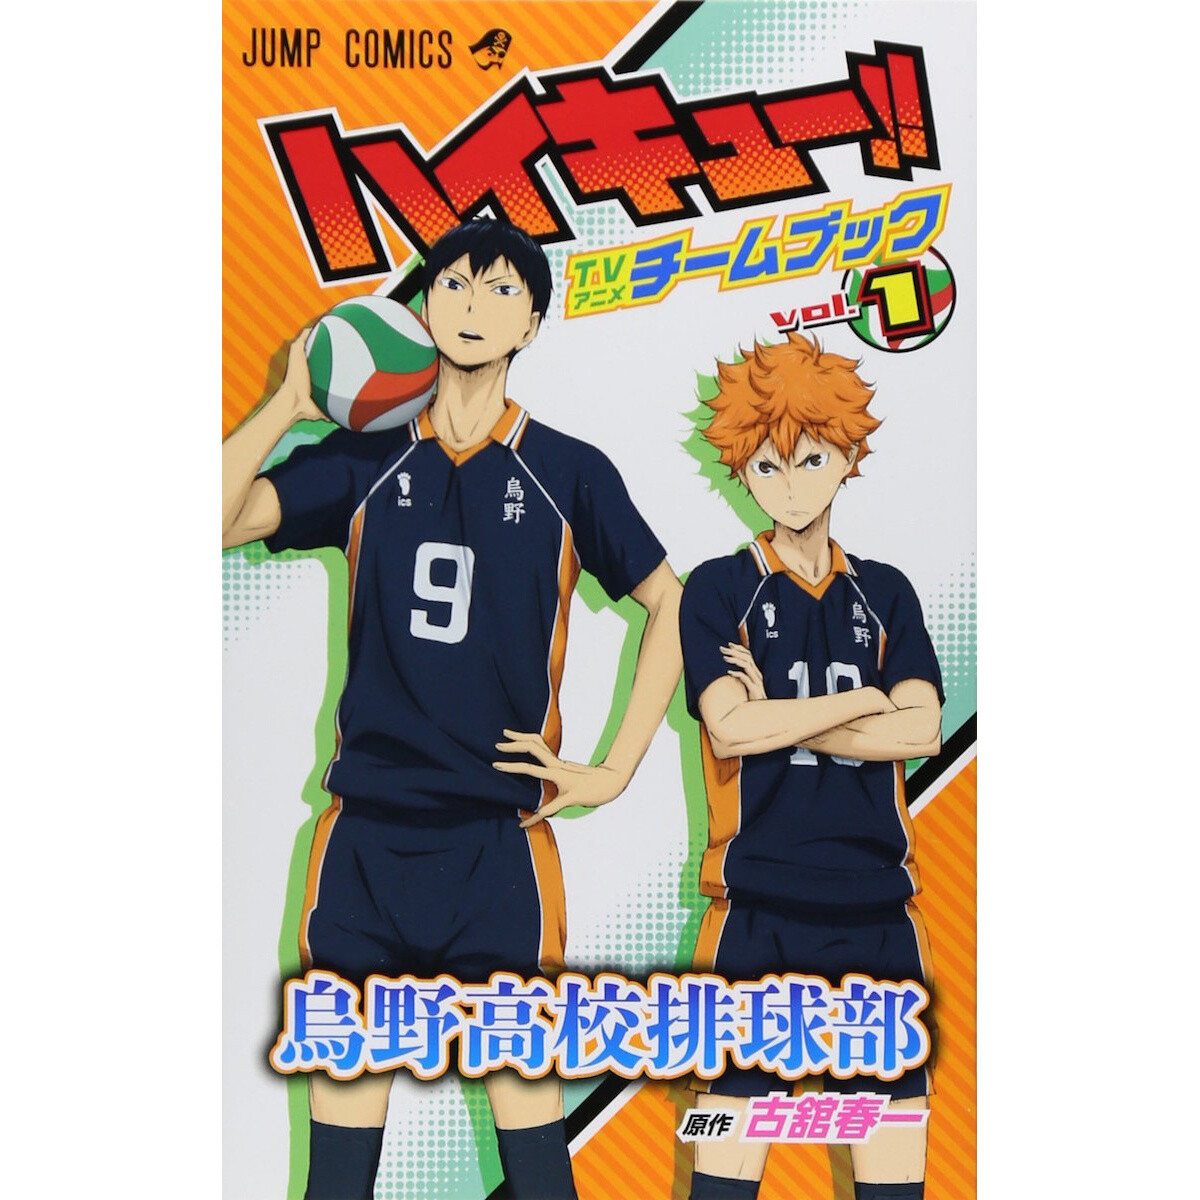 Inarizaki High School Best Volleyball Anime Haikyū!!